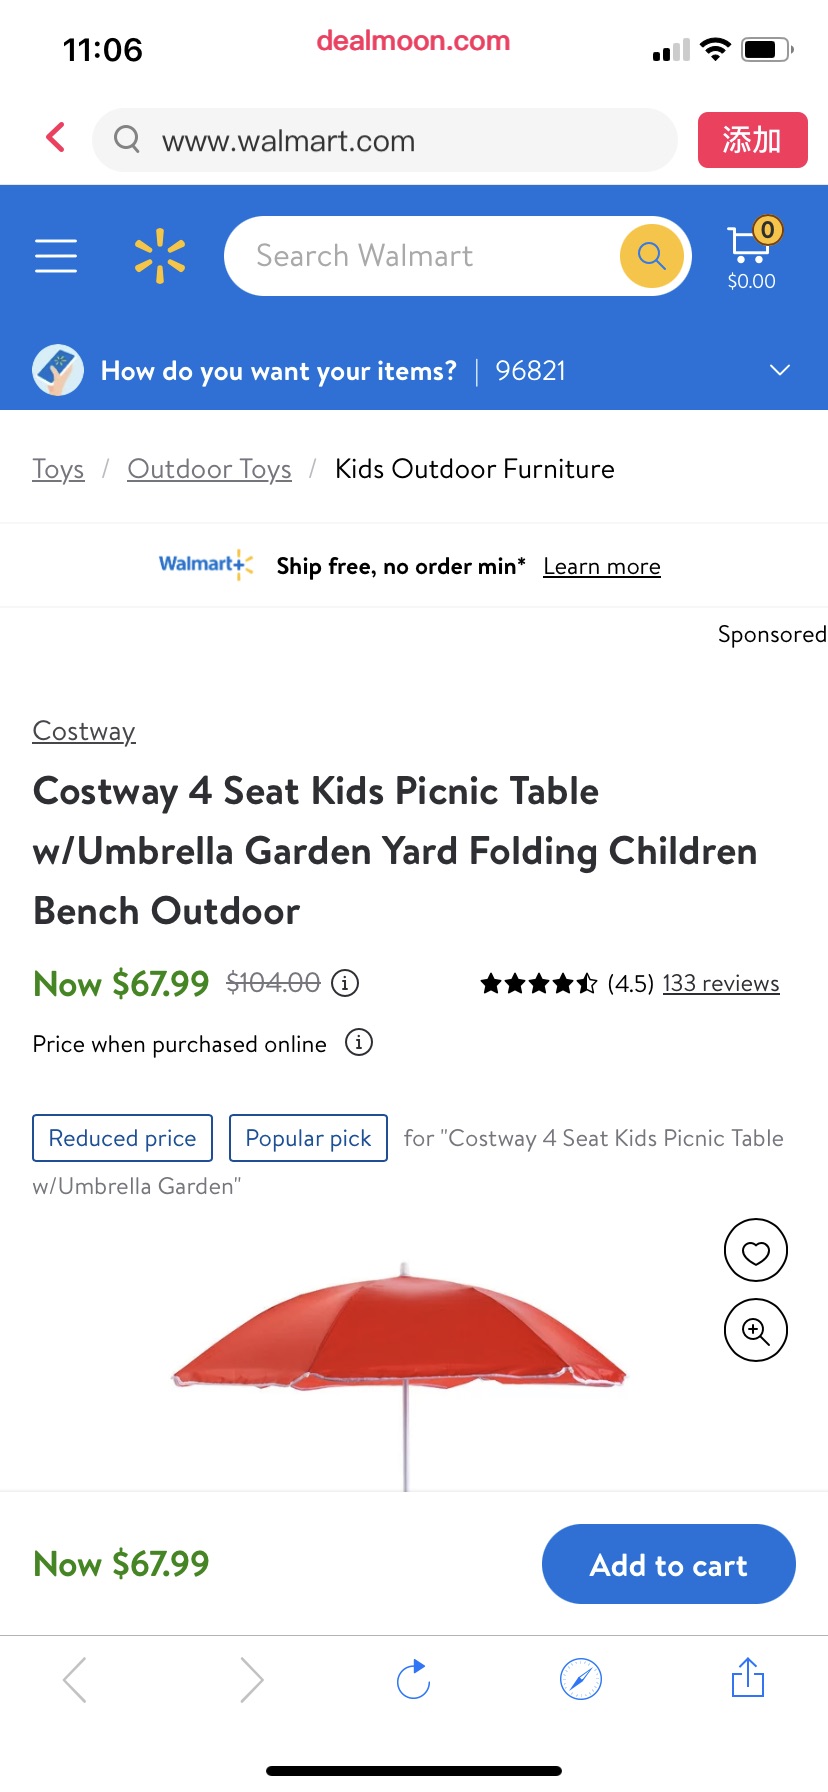 Costway 4 Seat Kids Picnic Table w/Umbrella Garden Yard Folding Children Bench Outdoor - 儿童室外野炊桌椅遮阳伞套装